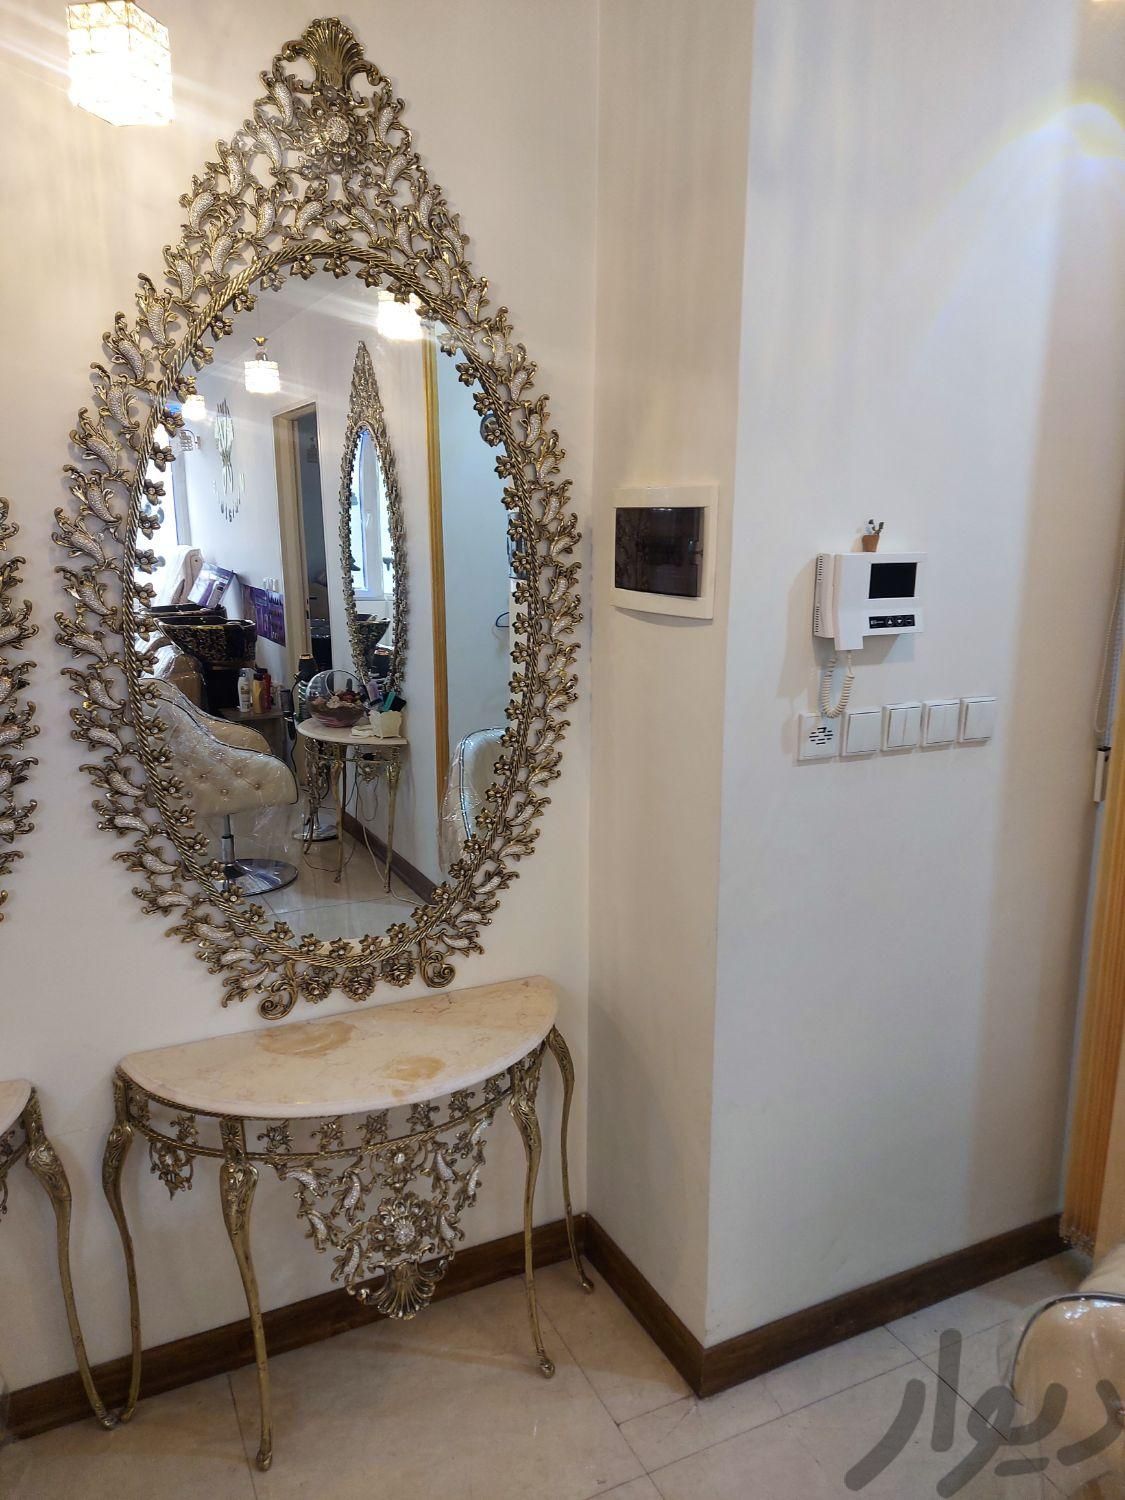 آینه وشمعدان برنز|آینه|تهران, میرداماد|دیوار